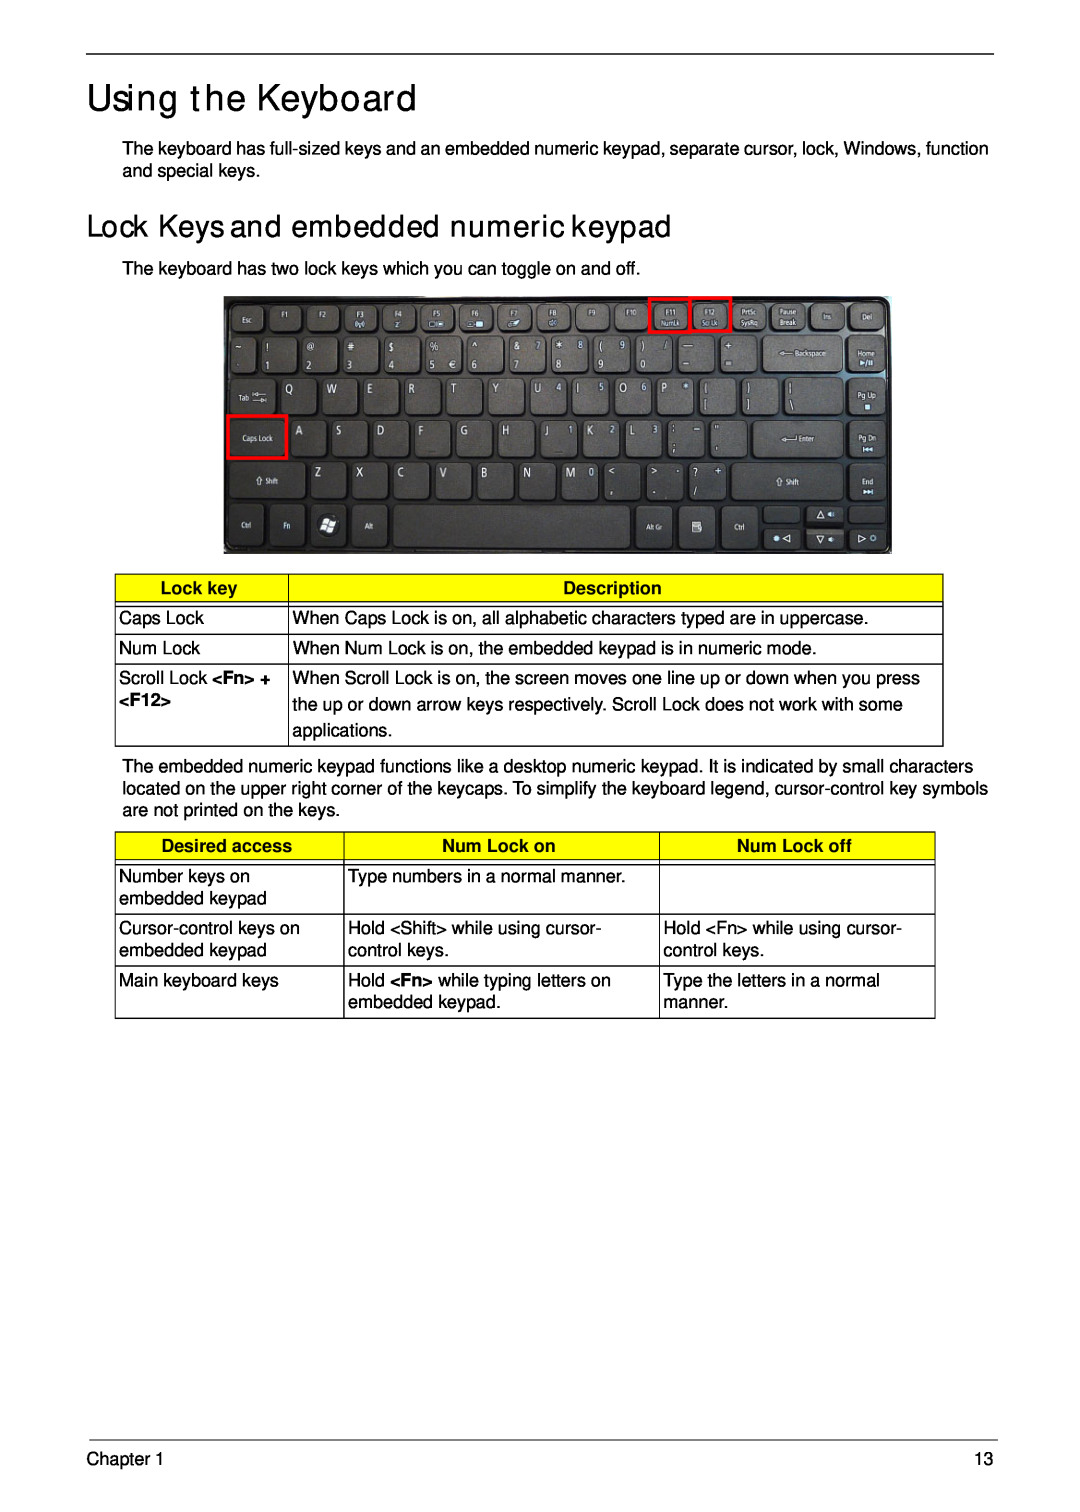 Aspire Digital 4625 manual Using the Keyboard, Lock Keys and embedded numeric keypad, Lock key, Description, Desired access 